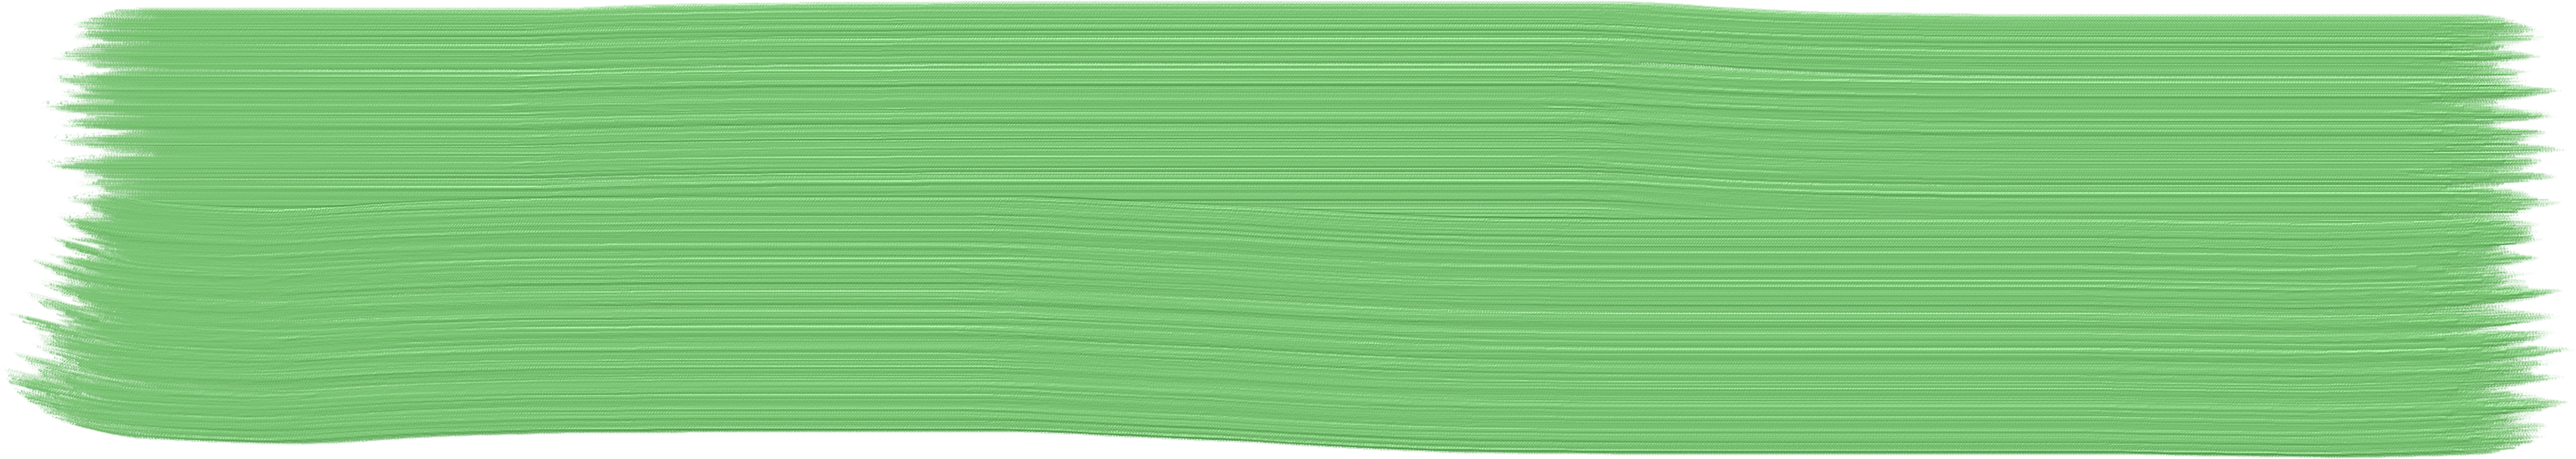 Green Line Brush Texture